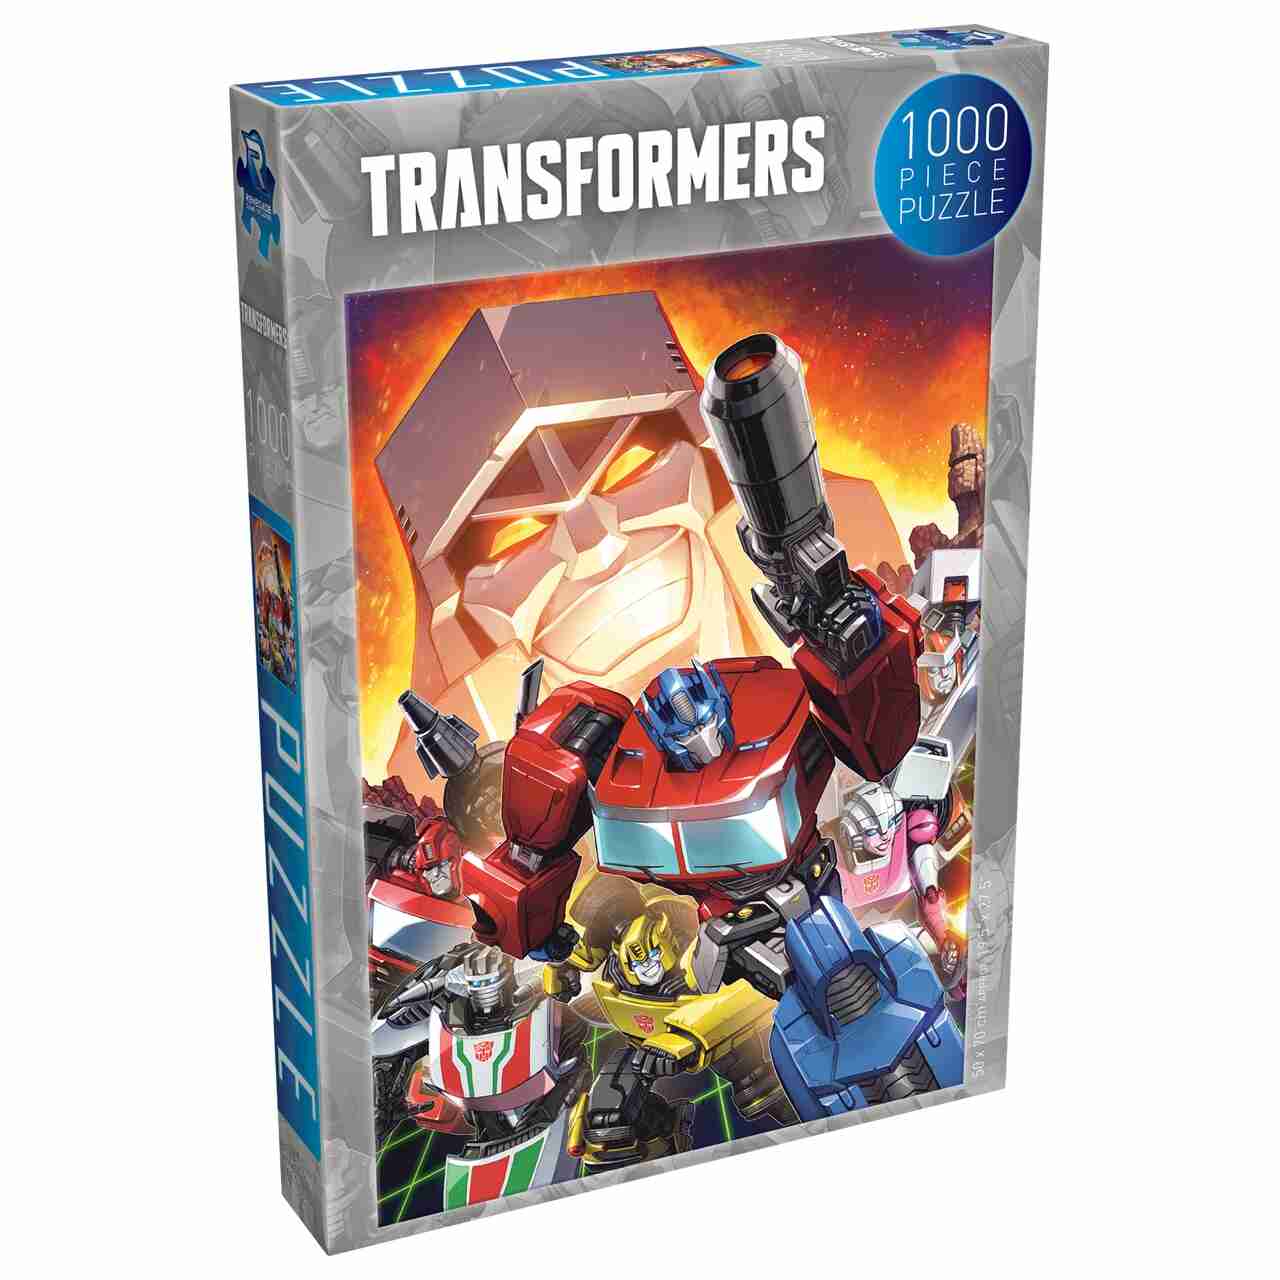 Transformers 1000 piece Puzzle | Pandora's Boox